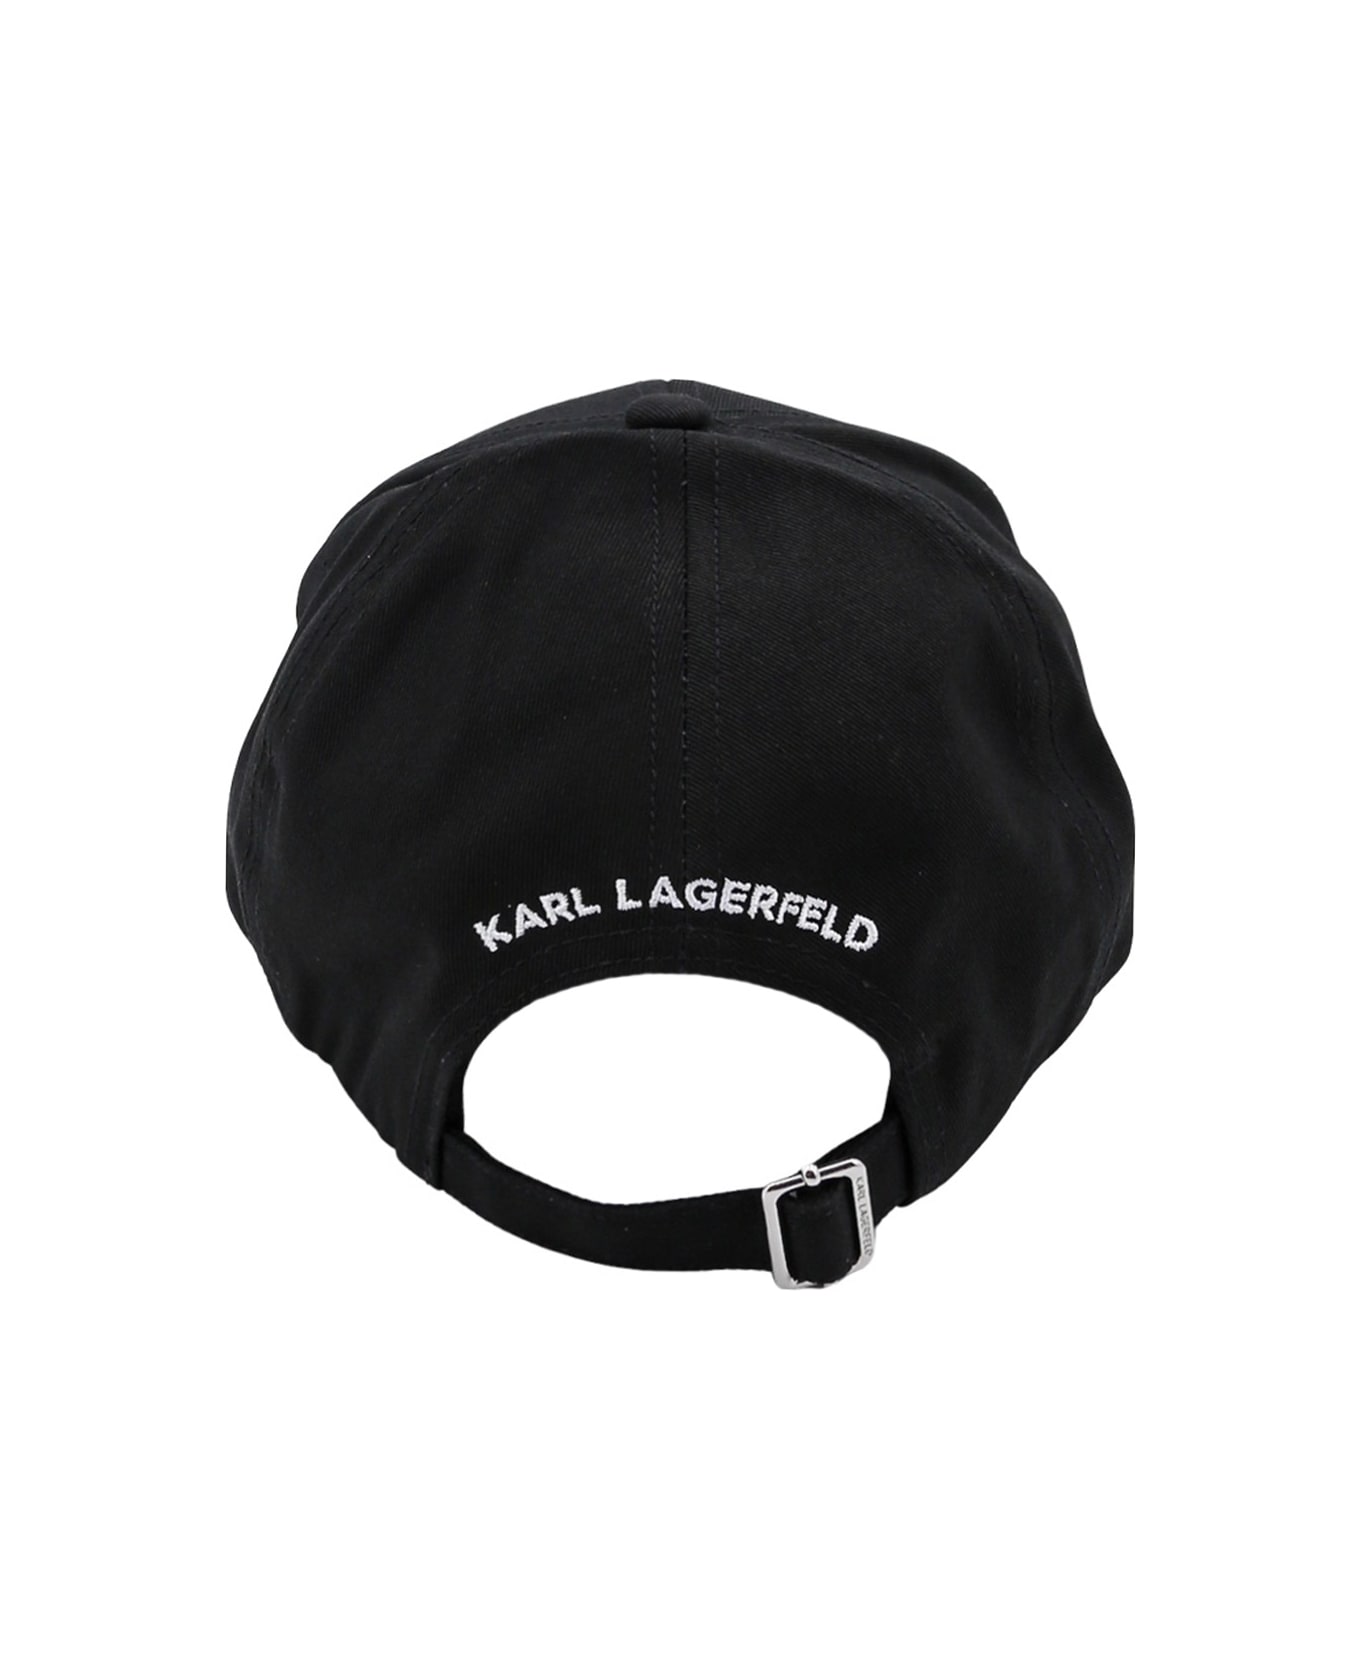 Karl Lagerfeld Hat - Black 帽子